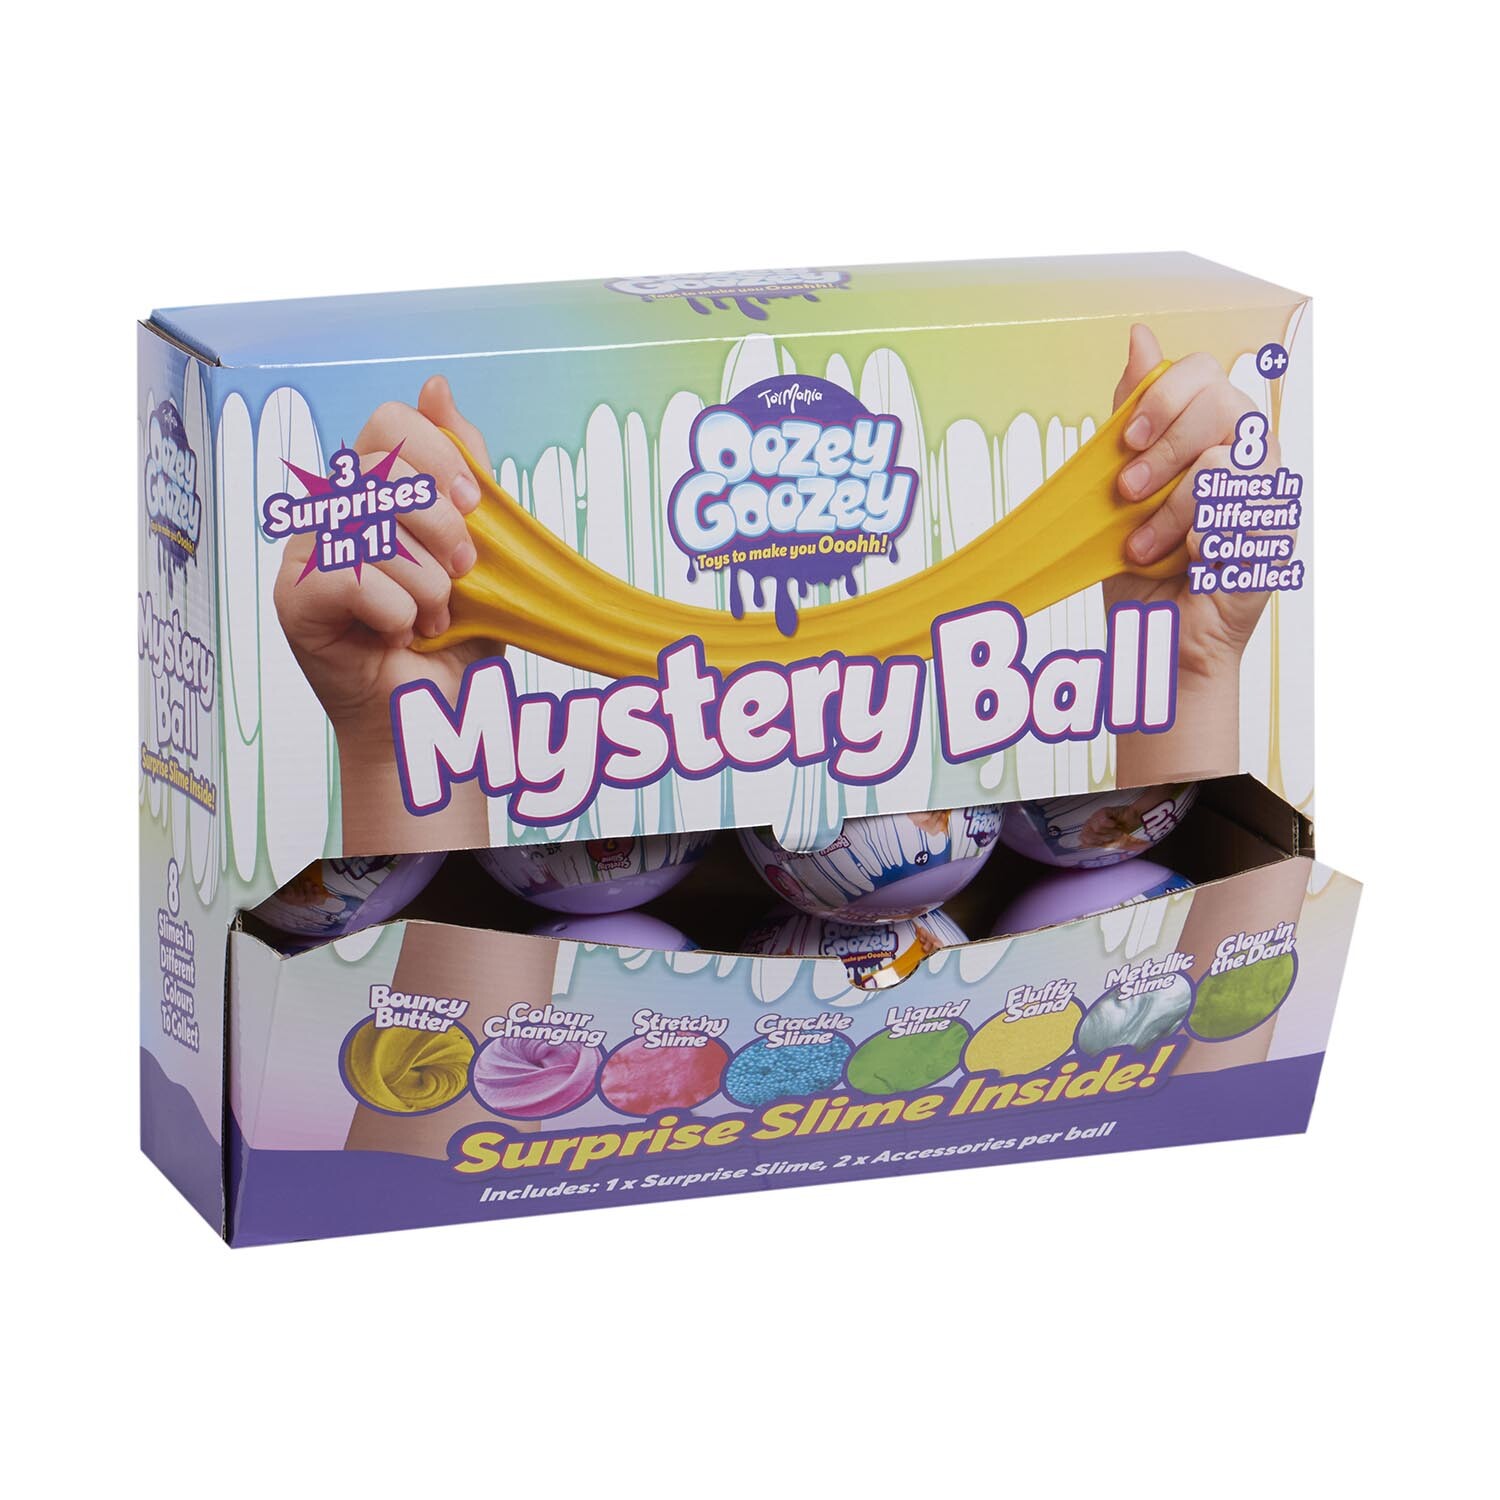 Oozey Goozey Mystery Ball Image